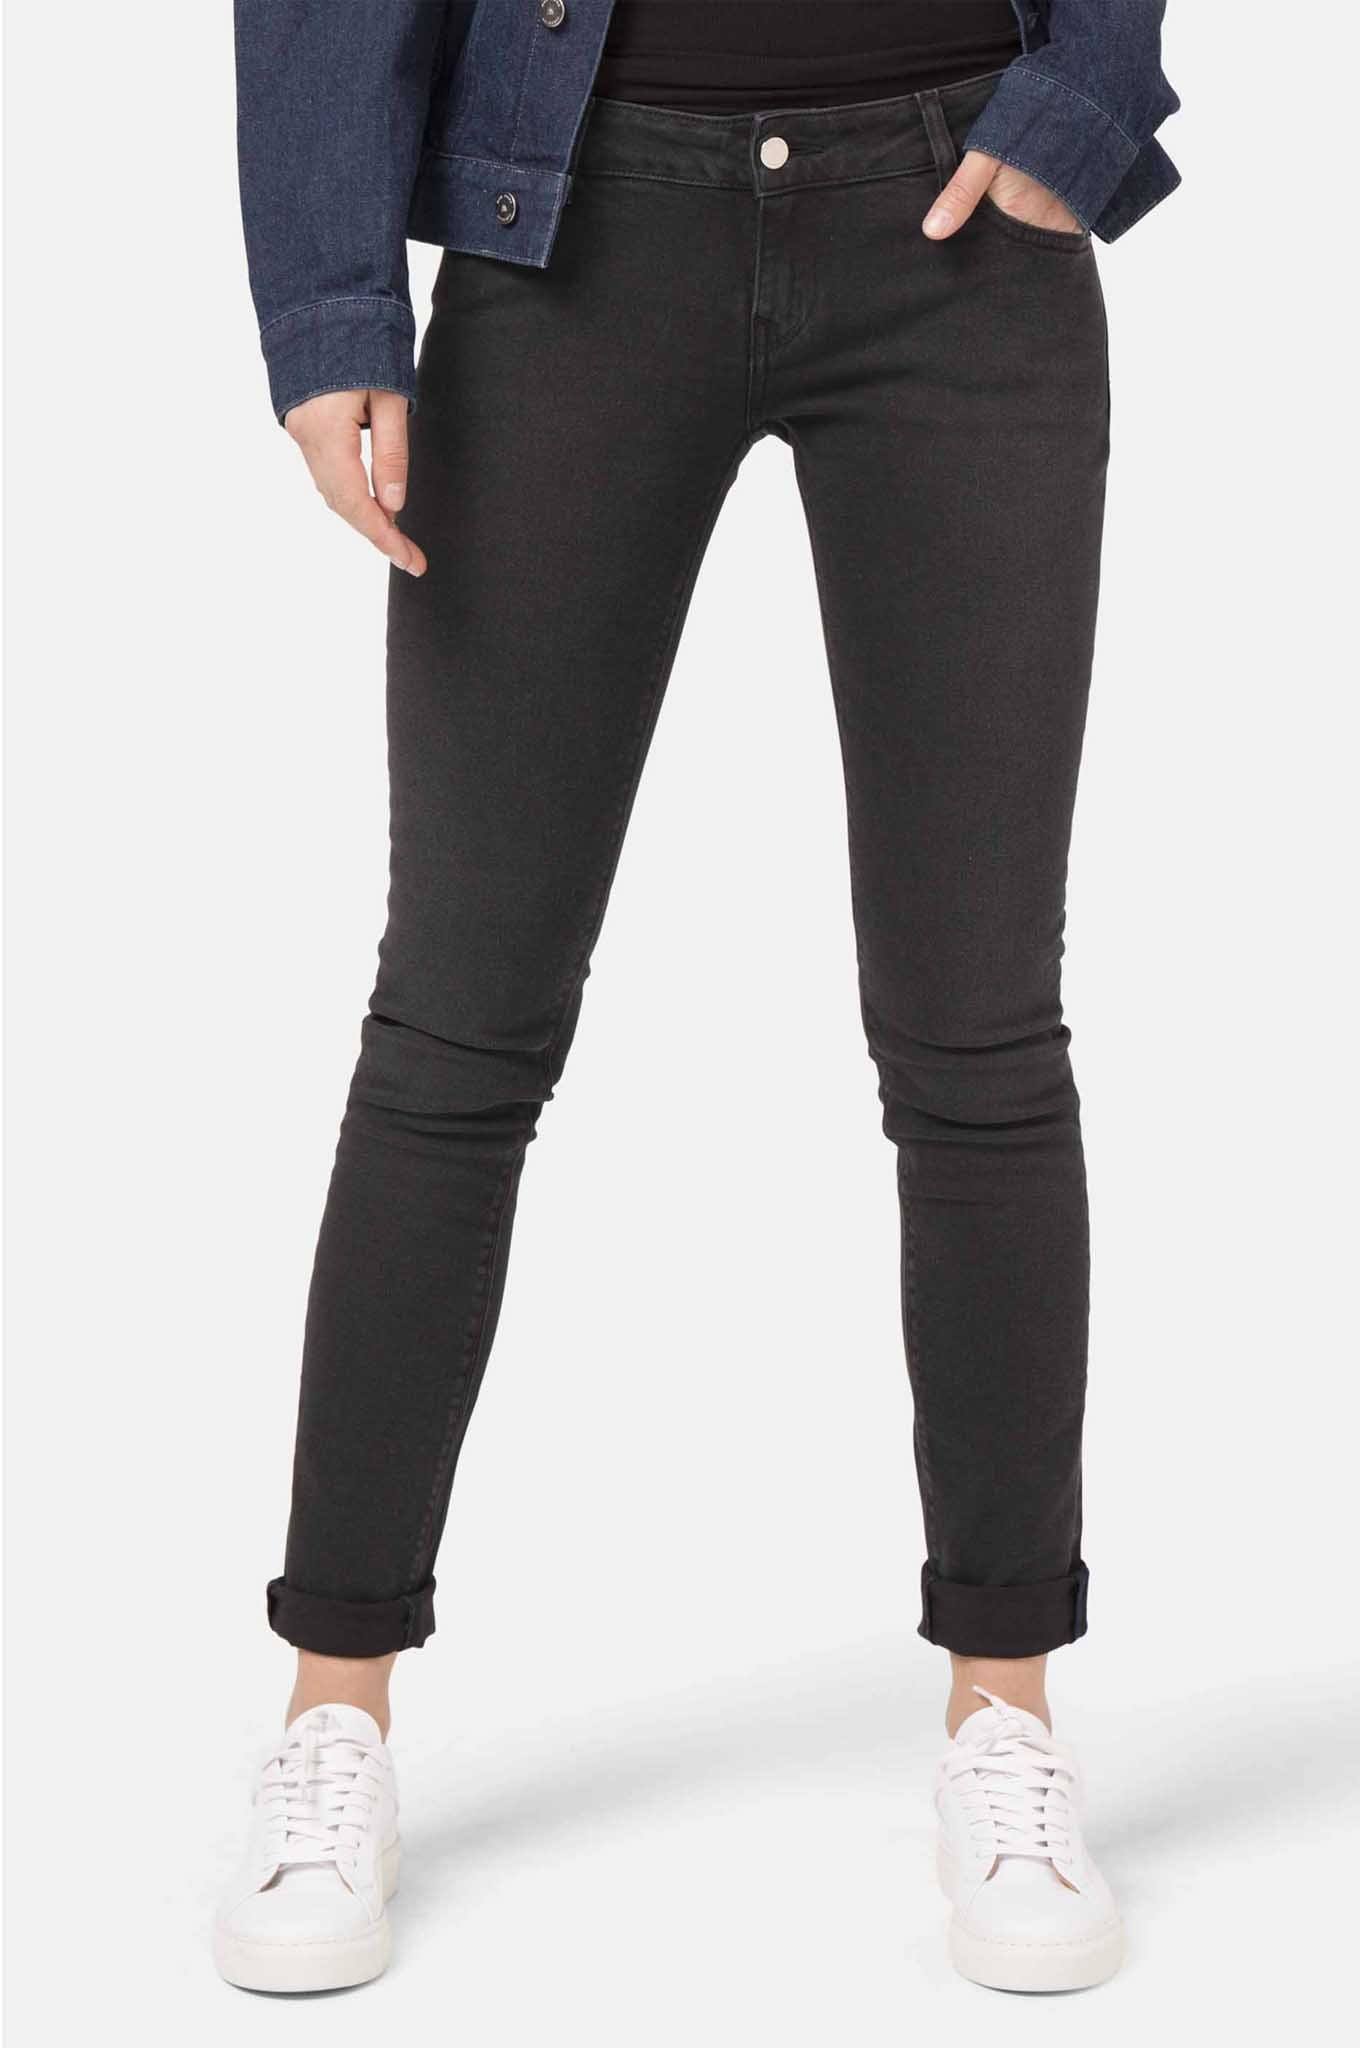 LILLY Womens skinny black jeans by MUD - Komodo Fashion